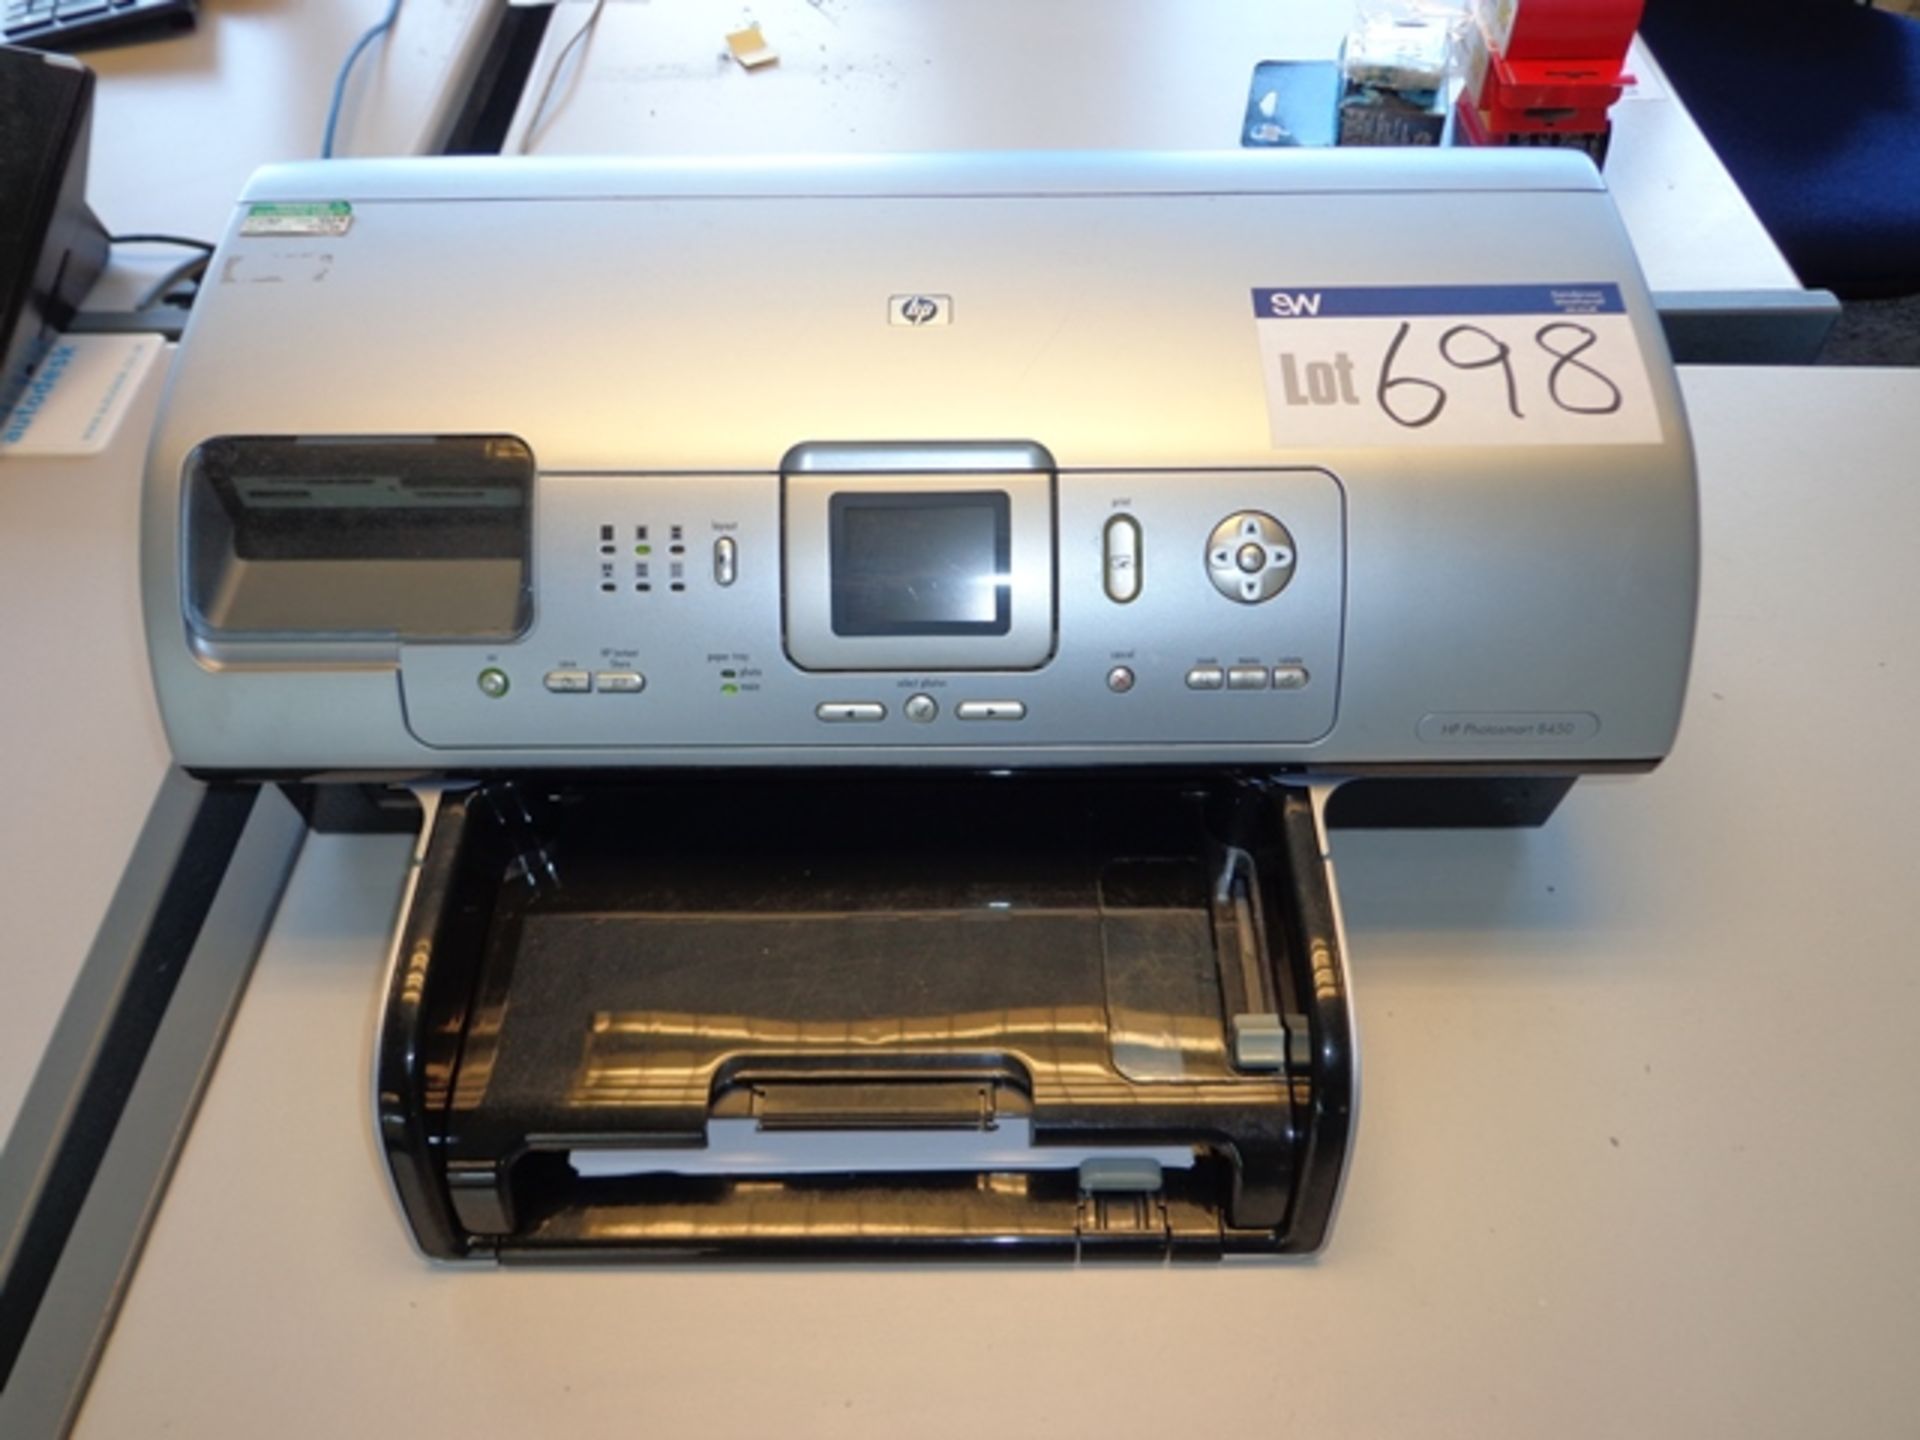 HP Photosmart 8450 Wireless Printer, serial number: CN55H2105G